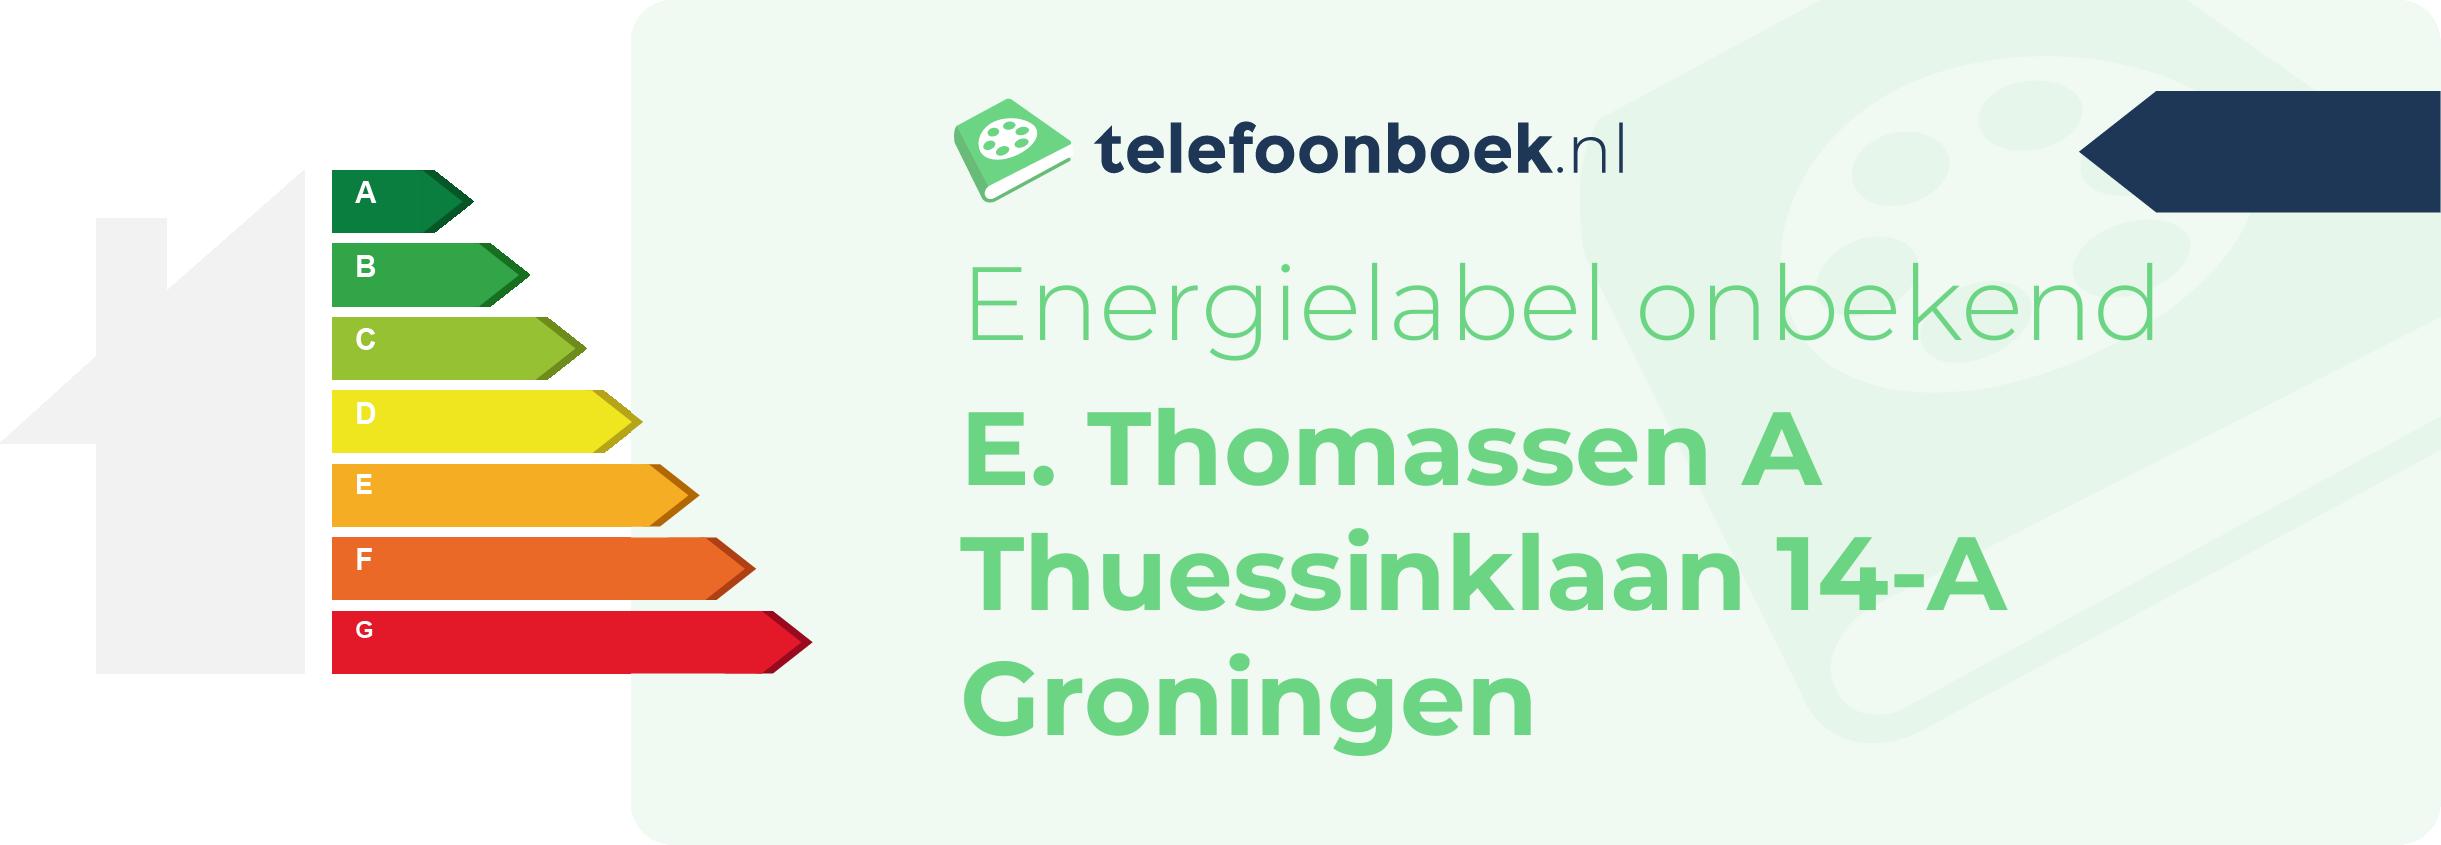 Energielabel E. Thomassen A Thuessinklaan 14-A Groningen